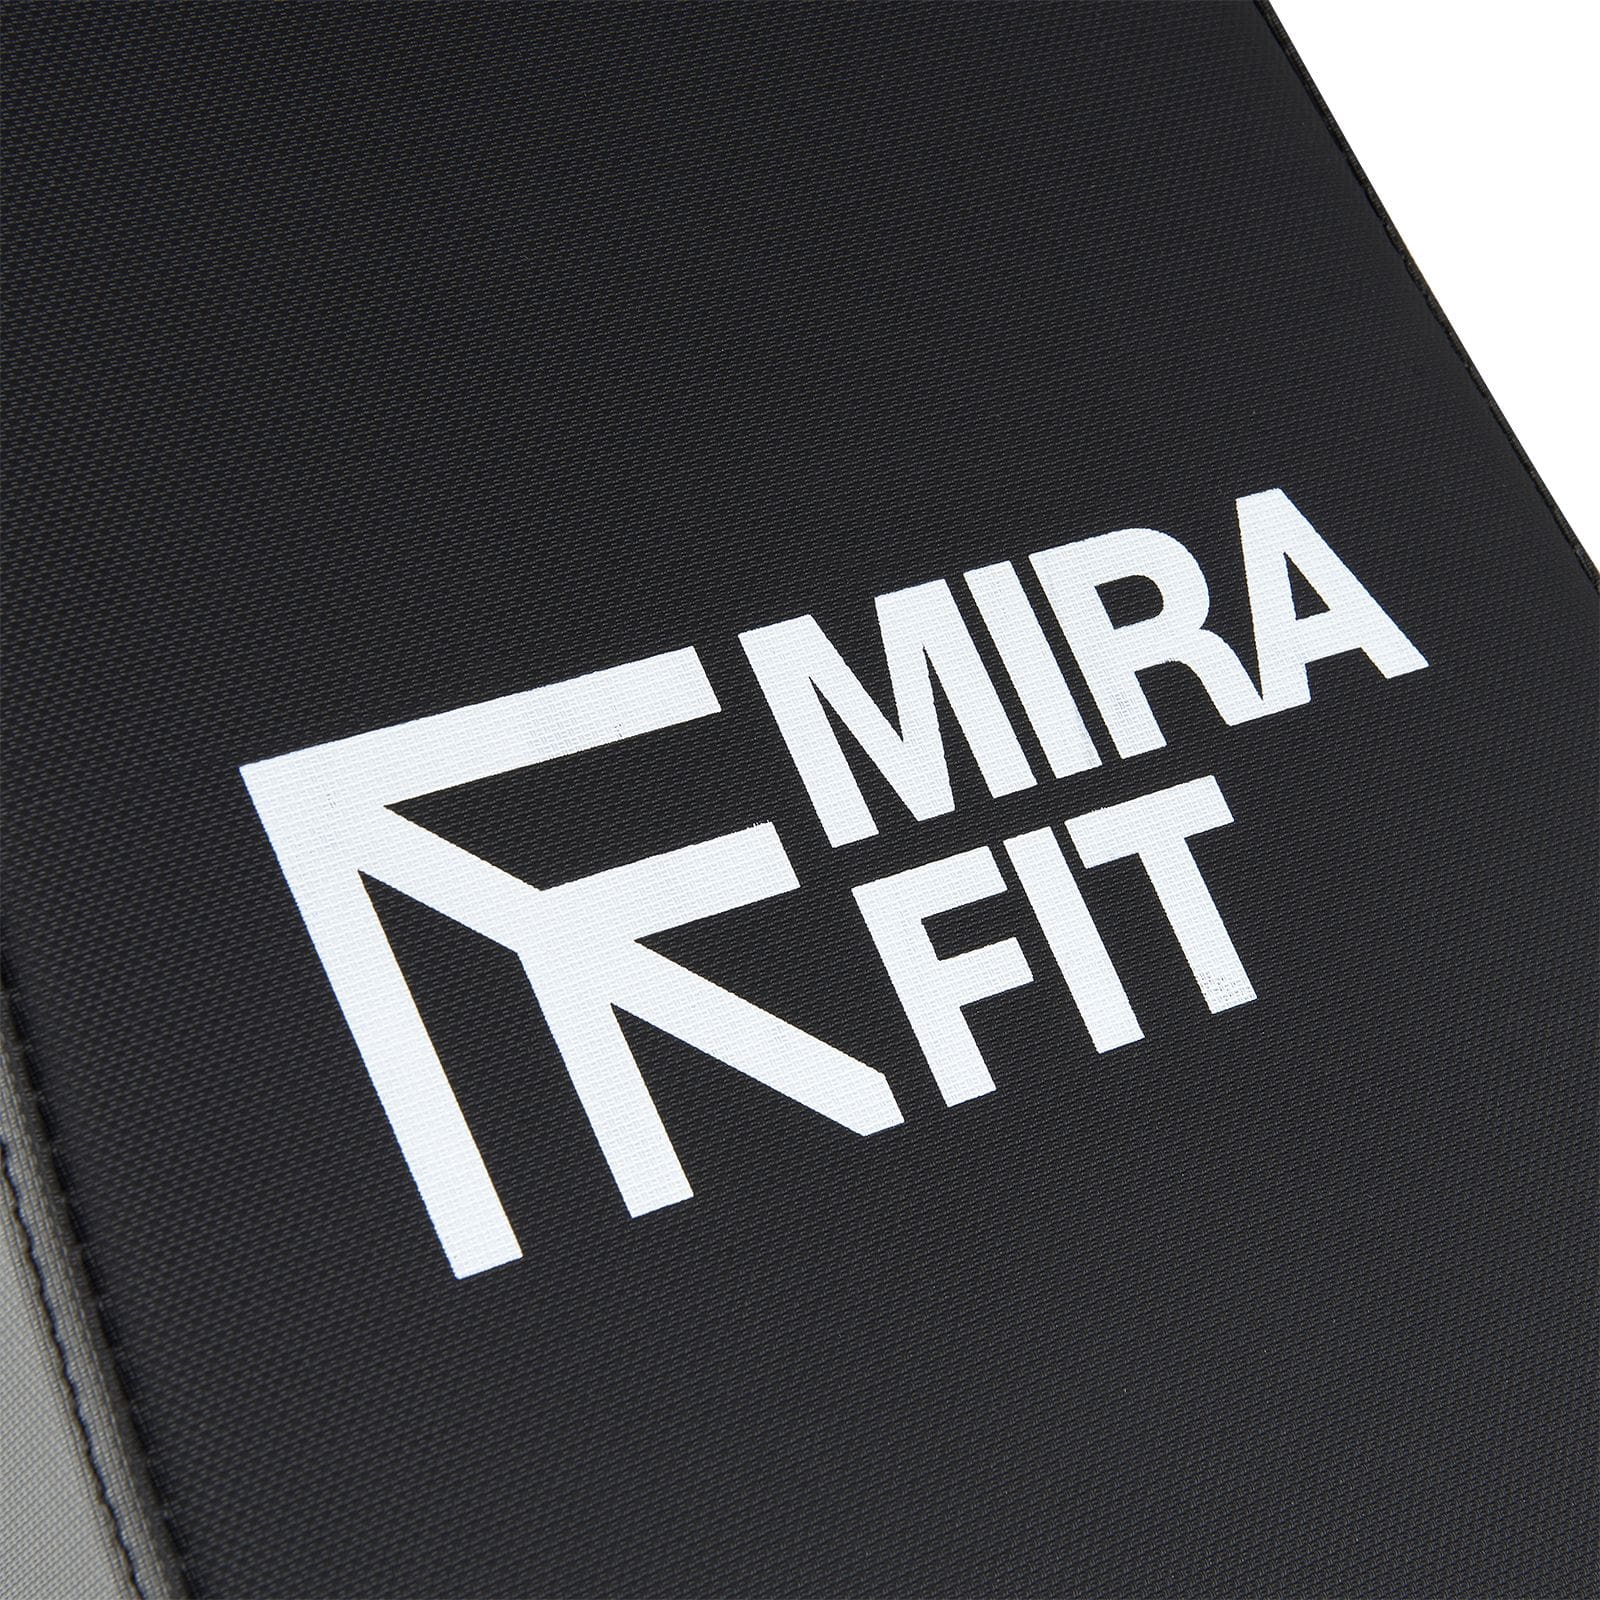 Mirafit Incline Bench - Logo Close Up UK